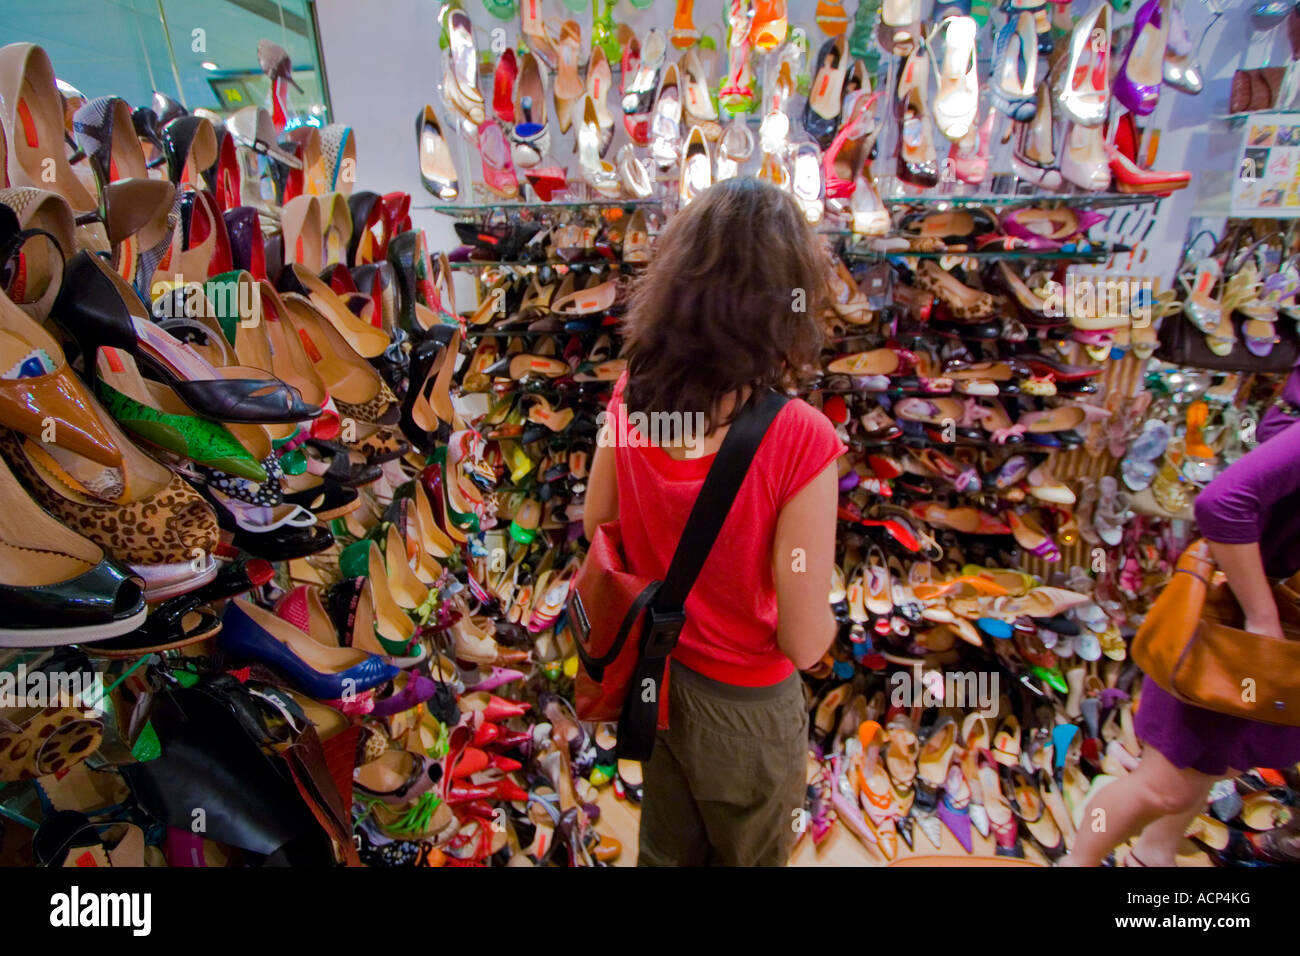 Young Woman Shopping in a Packed Shoe Store, Hong Kong Stock Photo